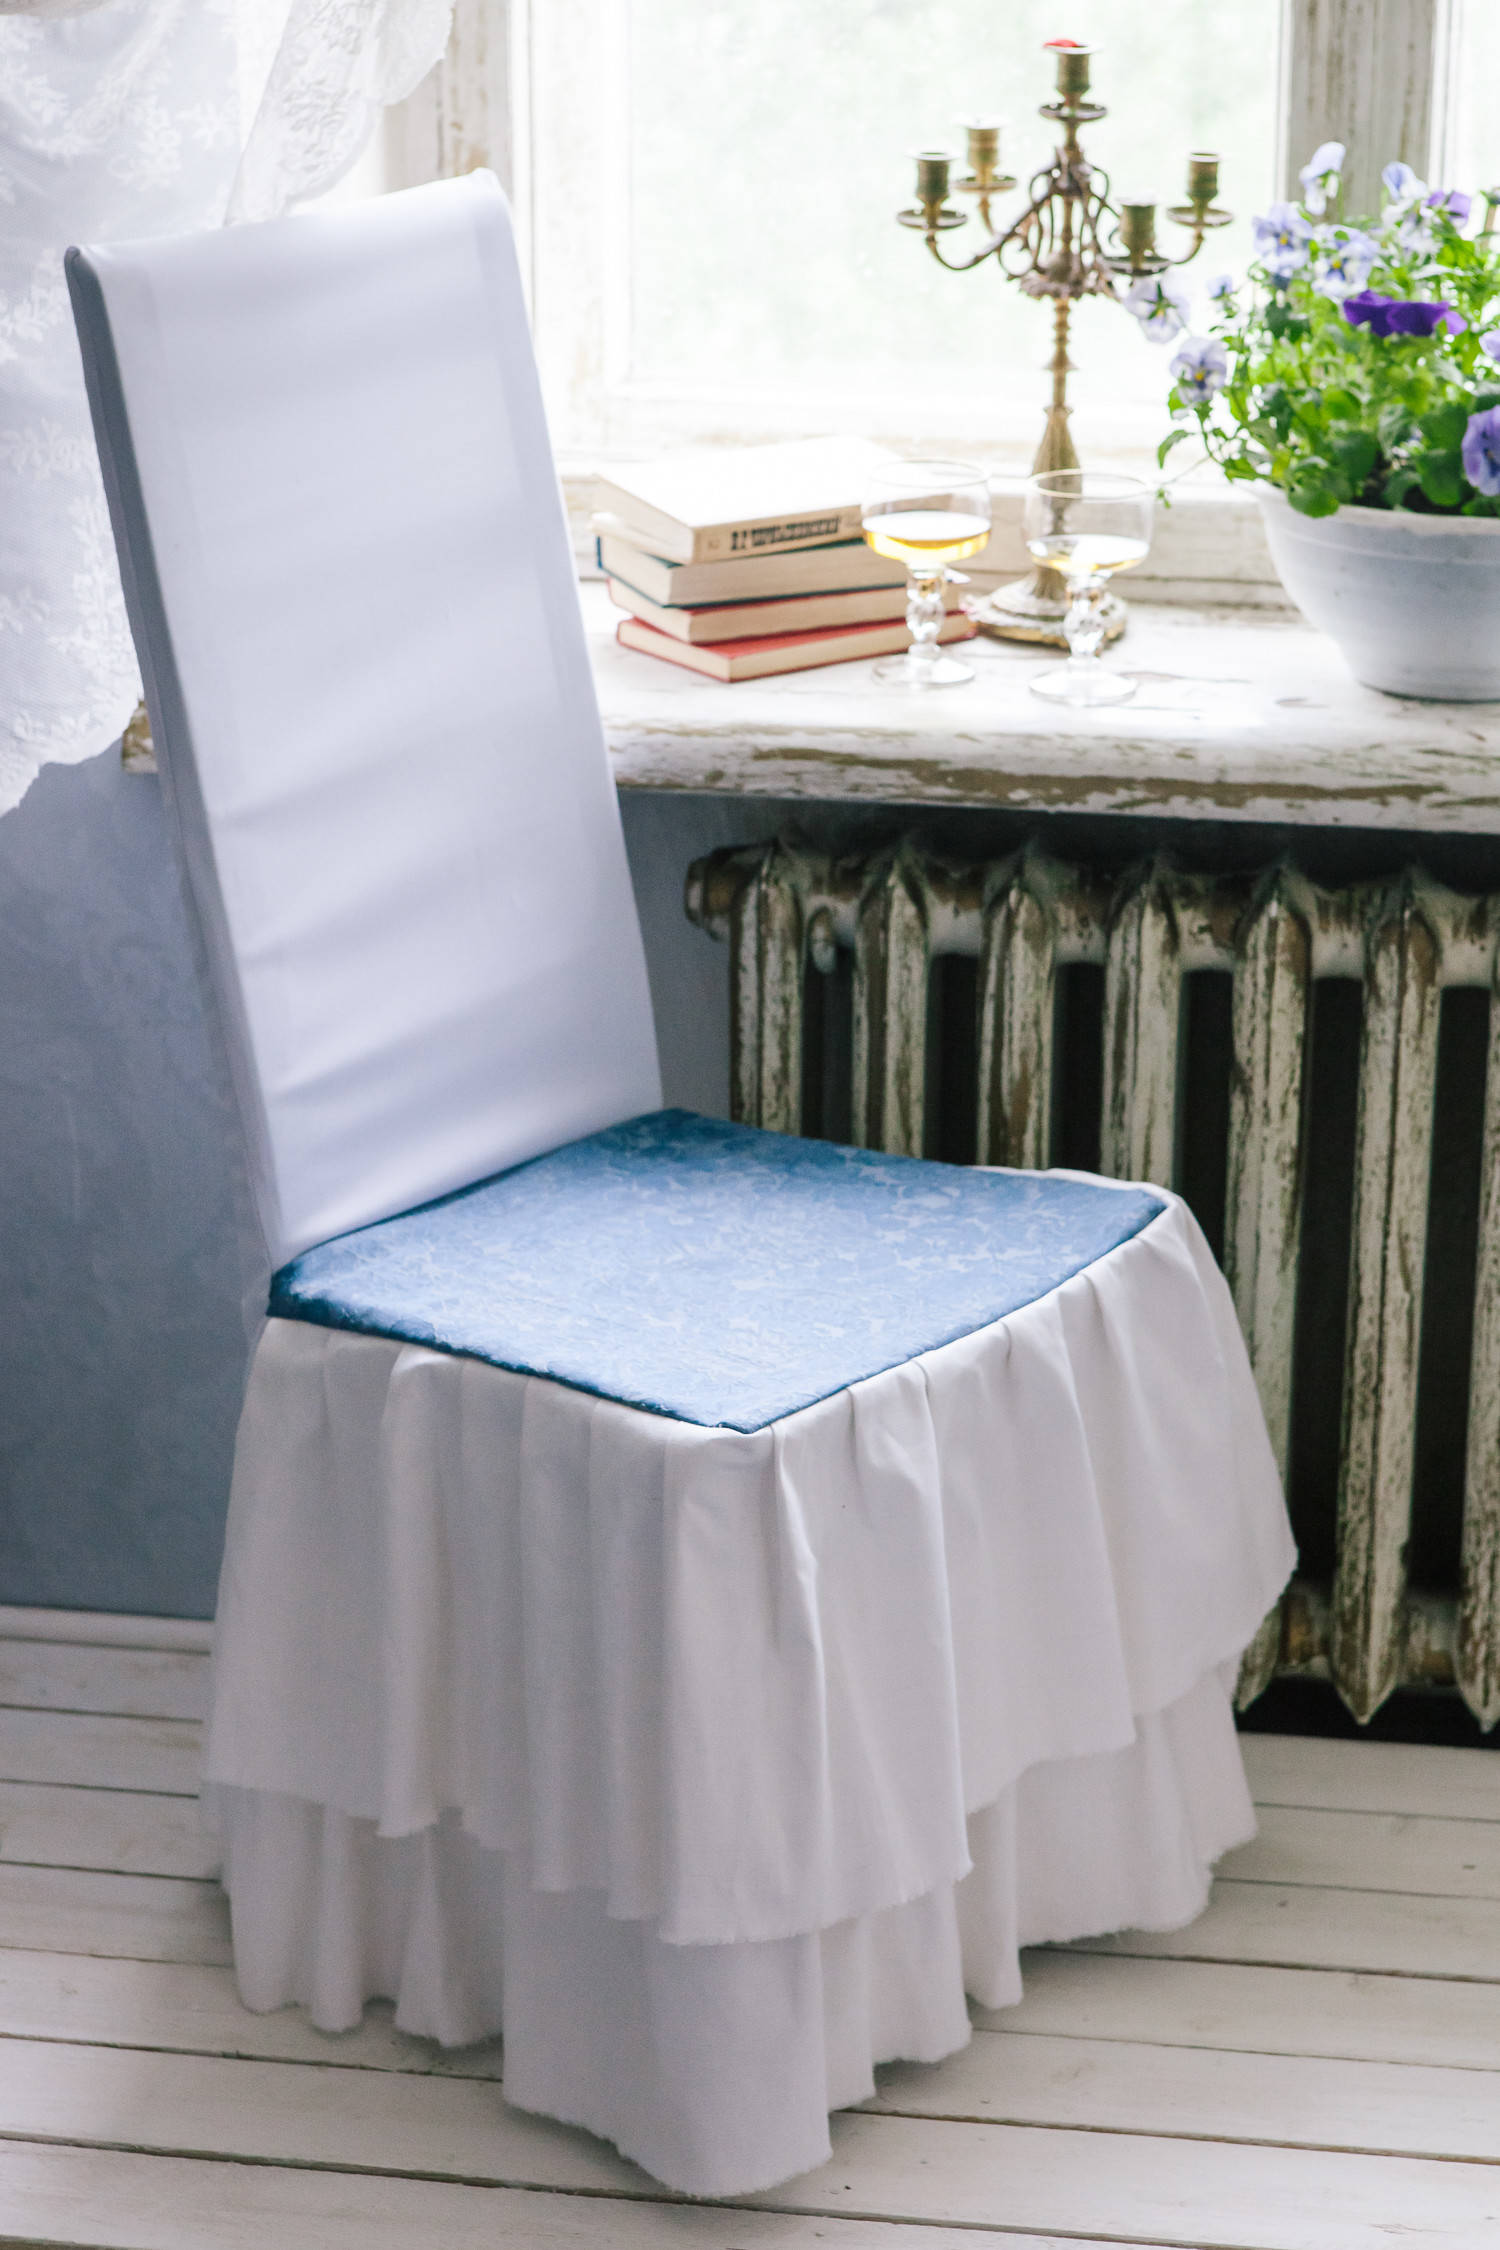 Как сшить чехол на спинку стула. How to sew a cover on the back of a chair.mp4